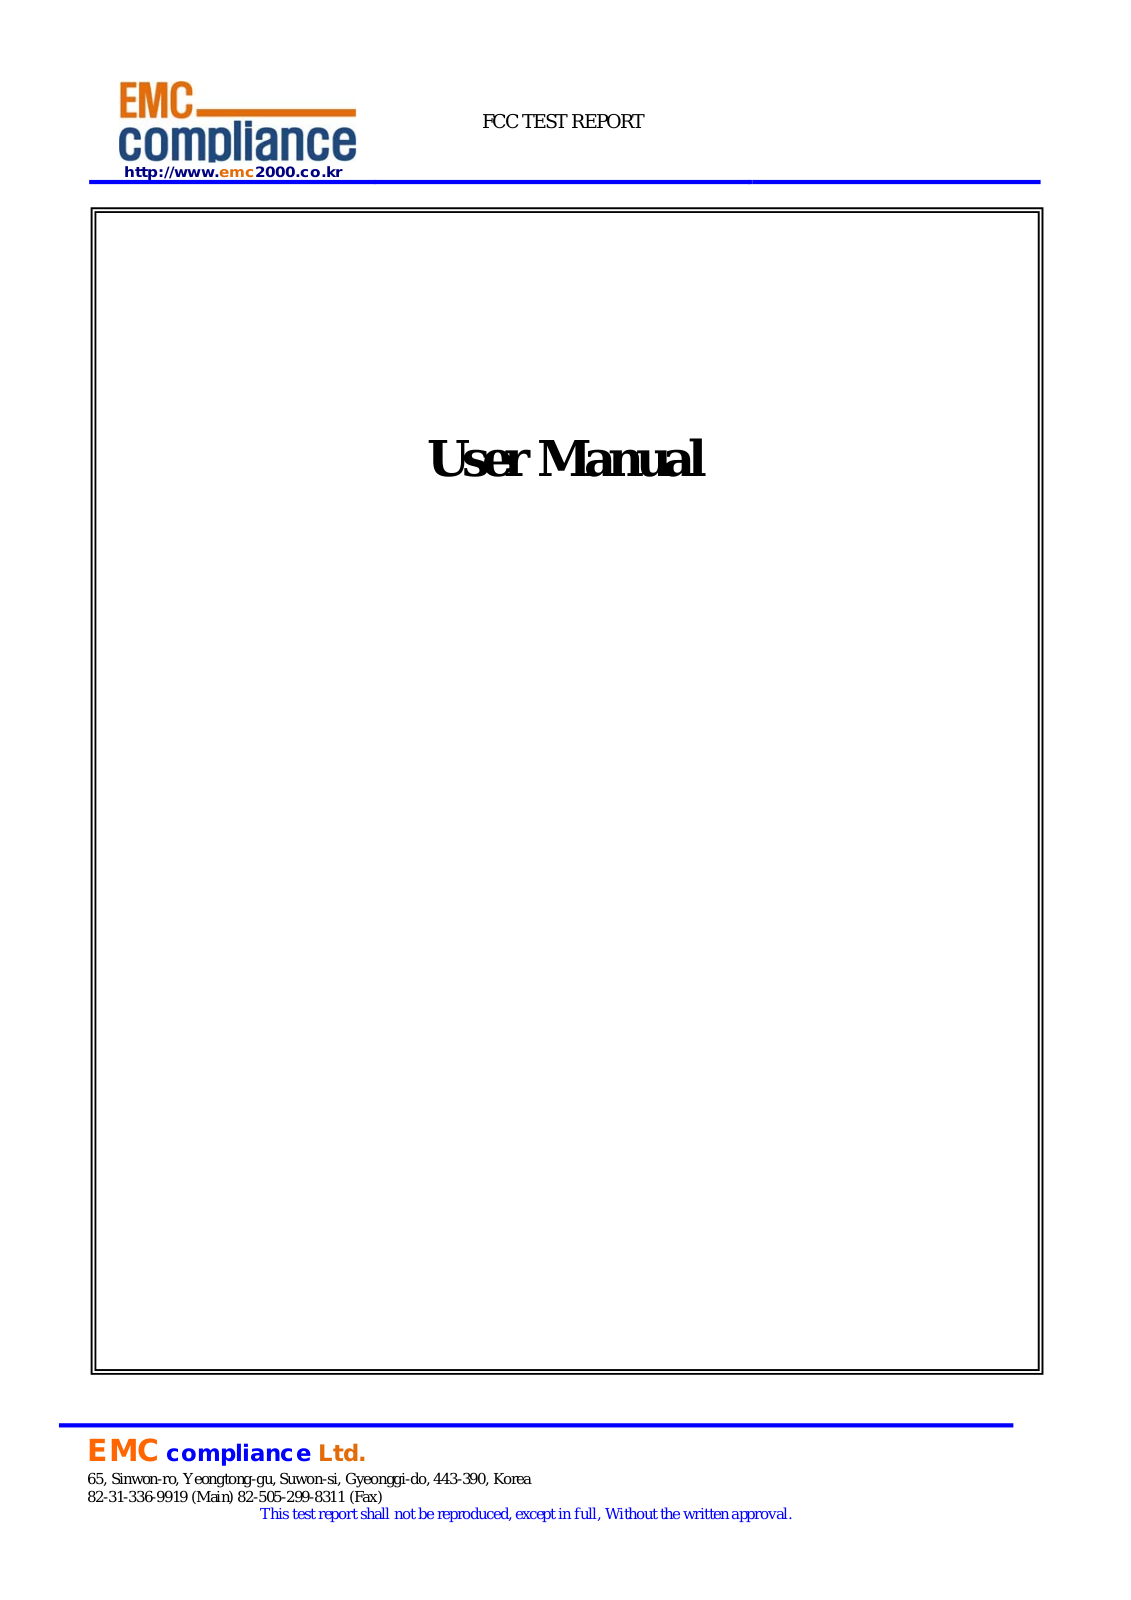 Samsung RMCTPJ User Manual